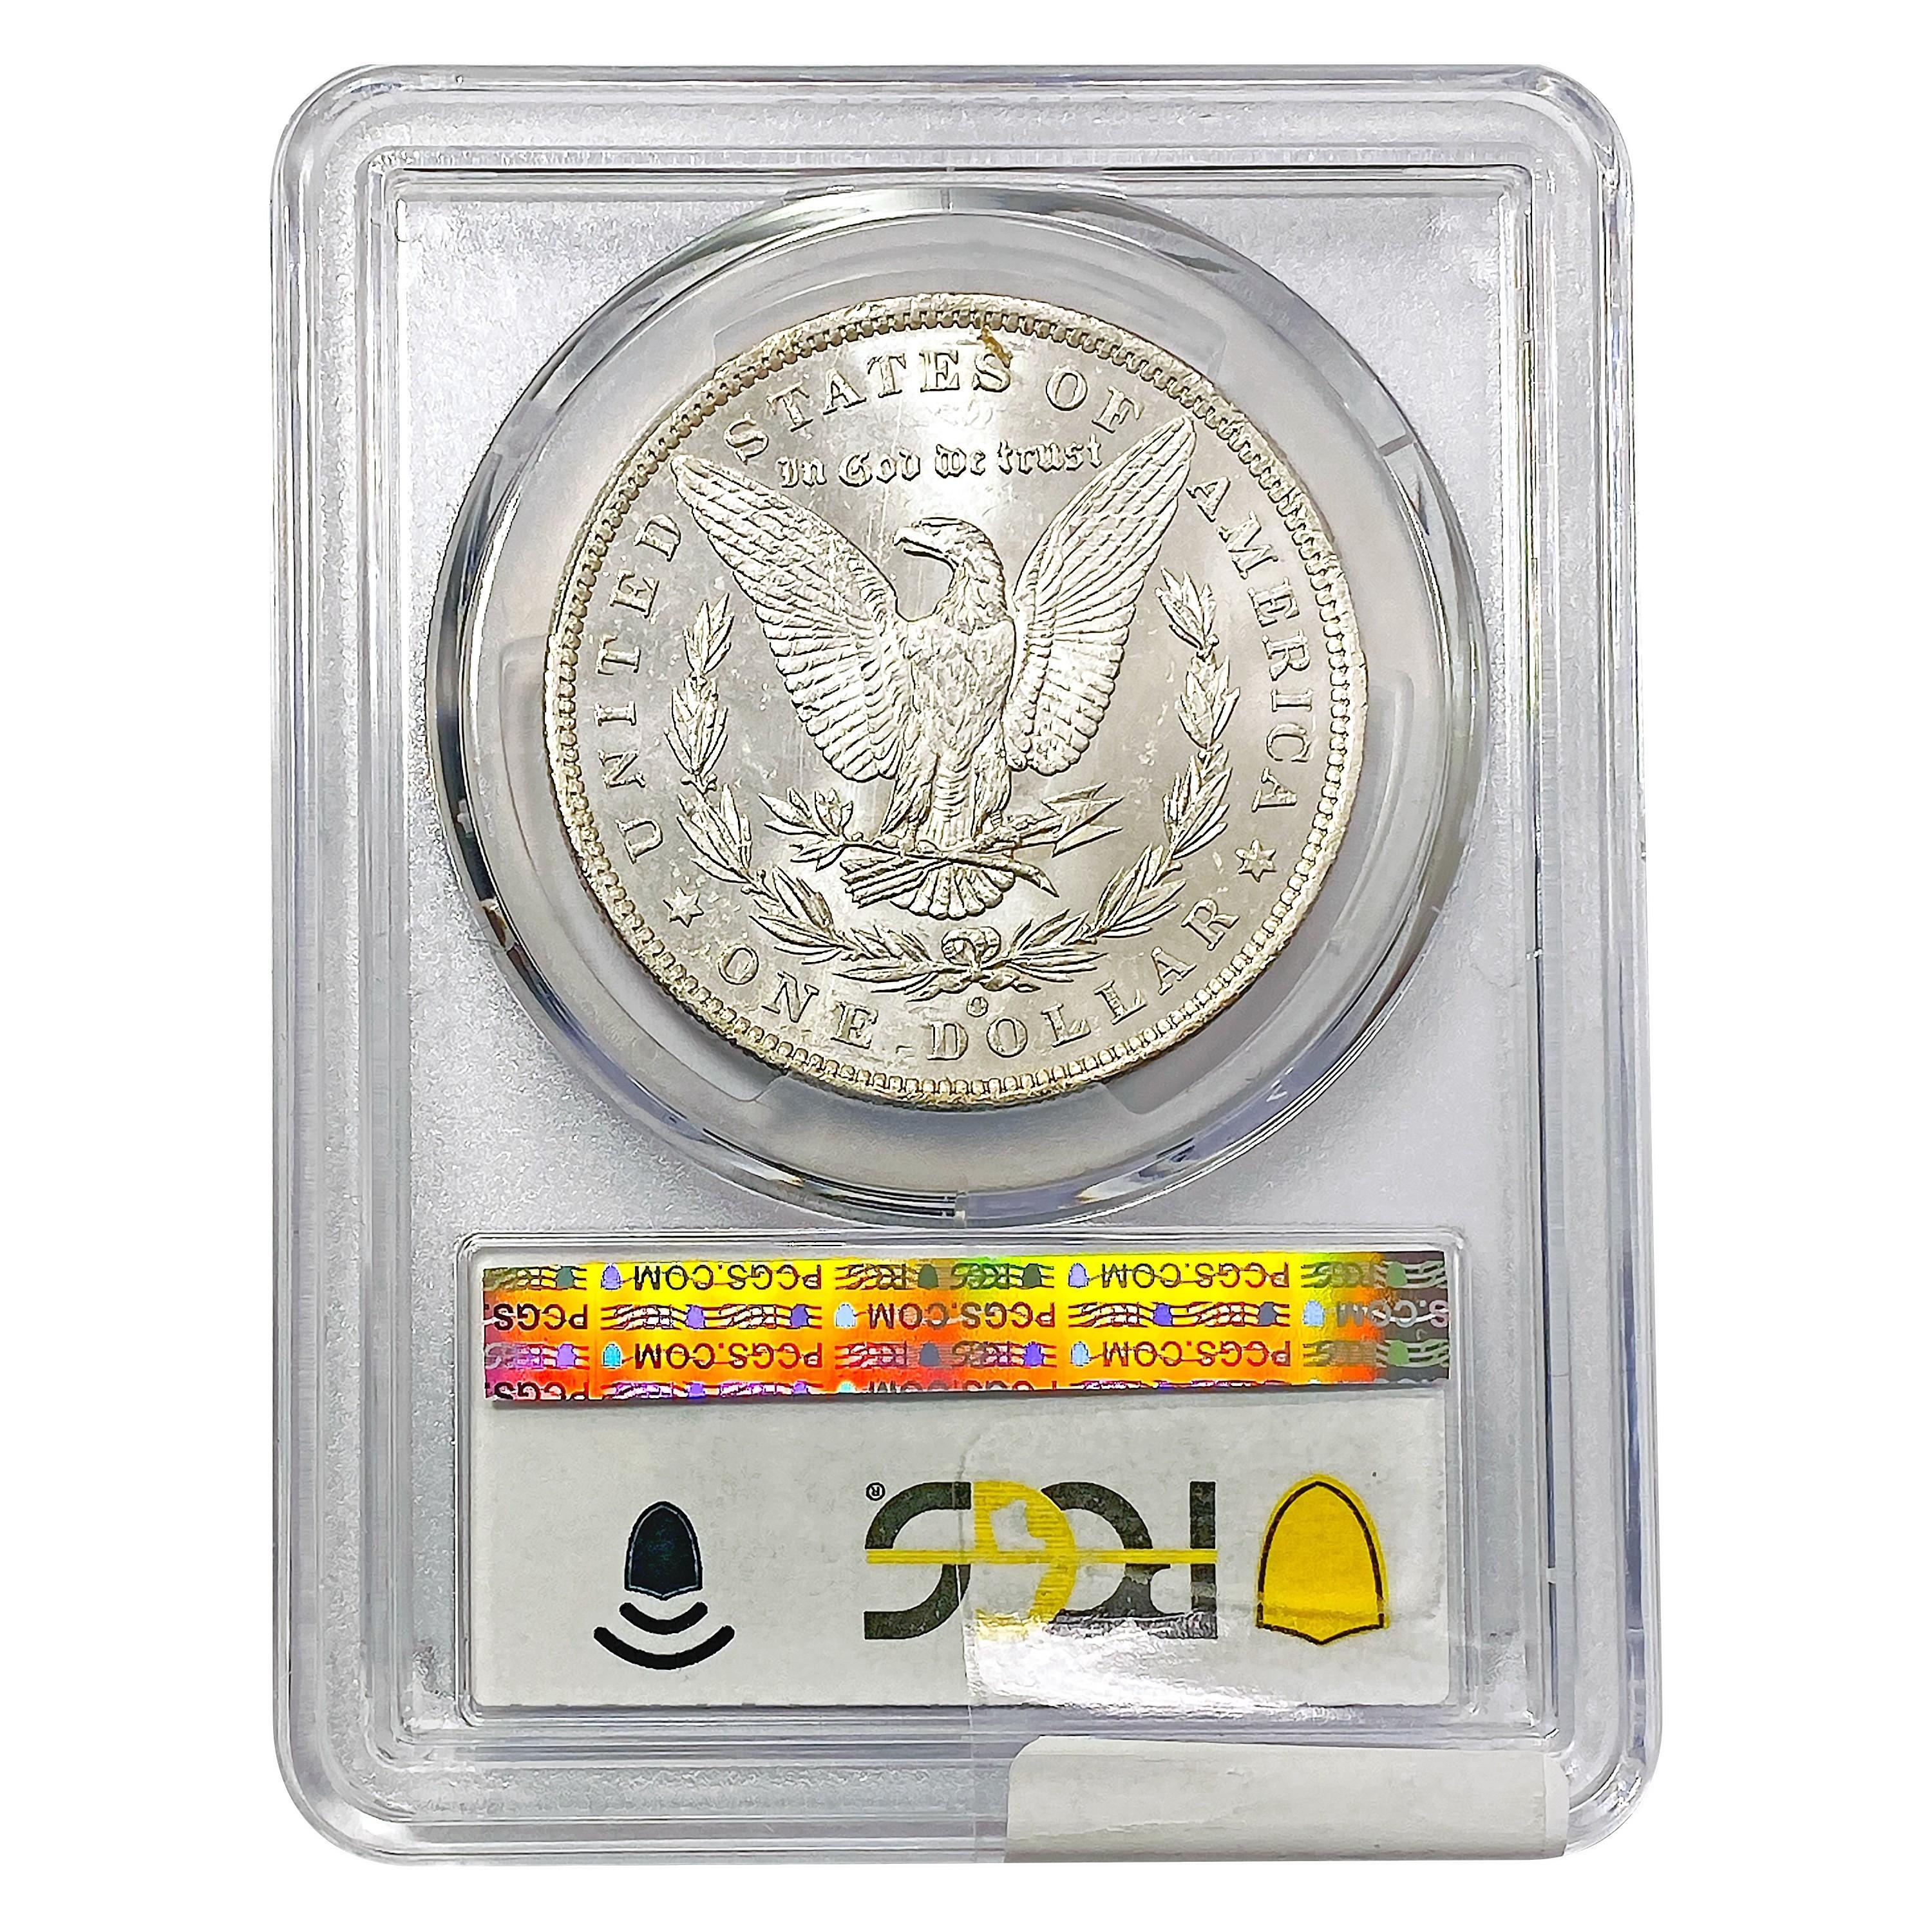 1885-O Morgan Silver Dollar PCGS MS64